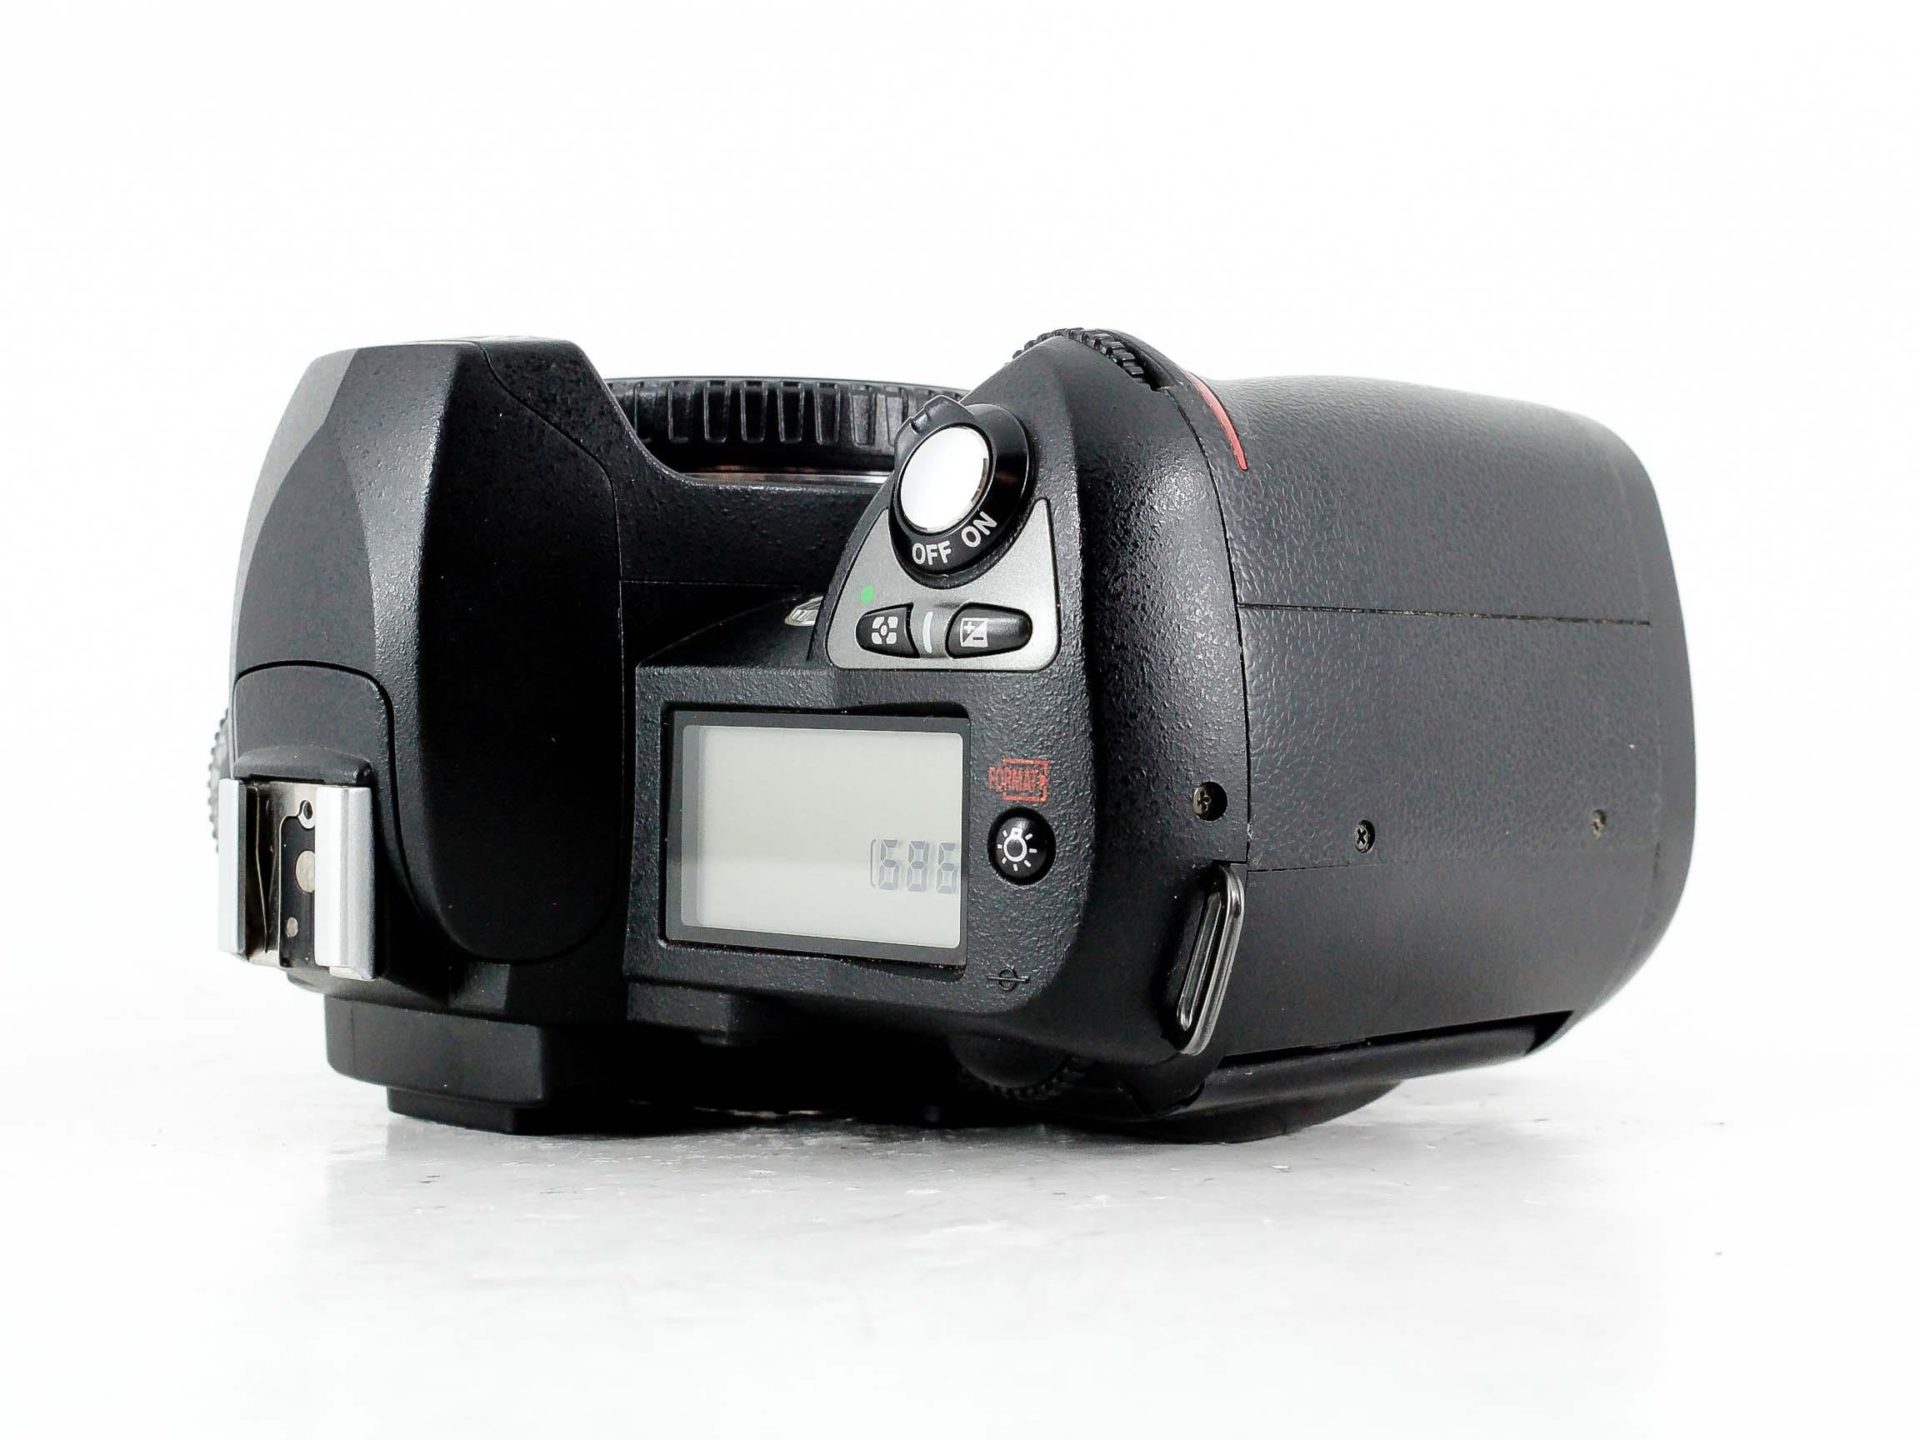 Nikon D D70 6.1MP Digital SLR Camera Black Body Only 